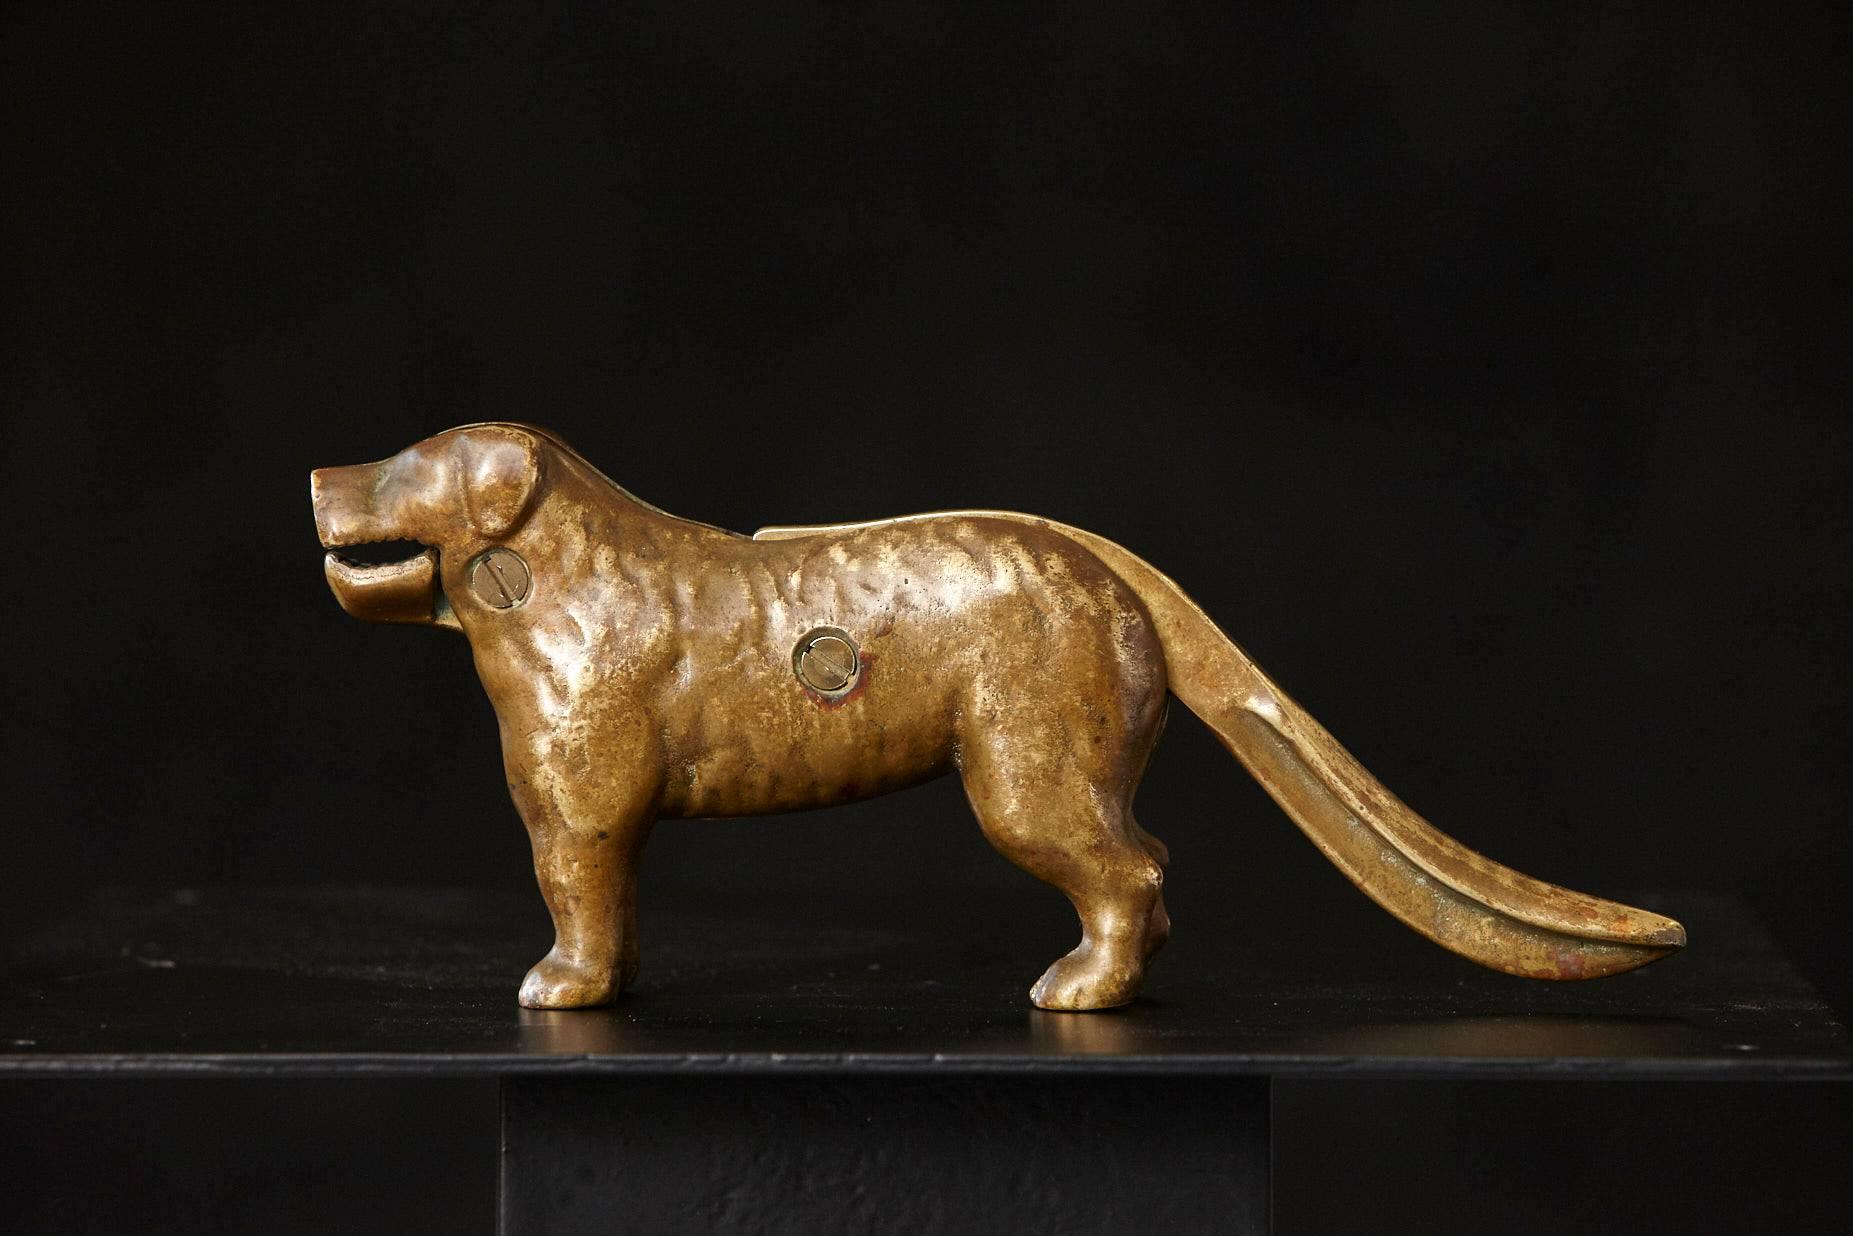 antique brass dog nutcracker